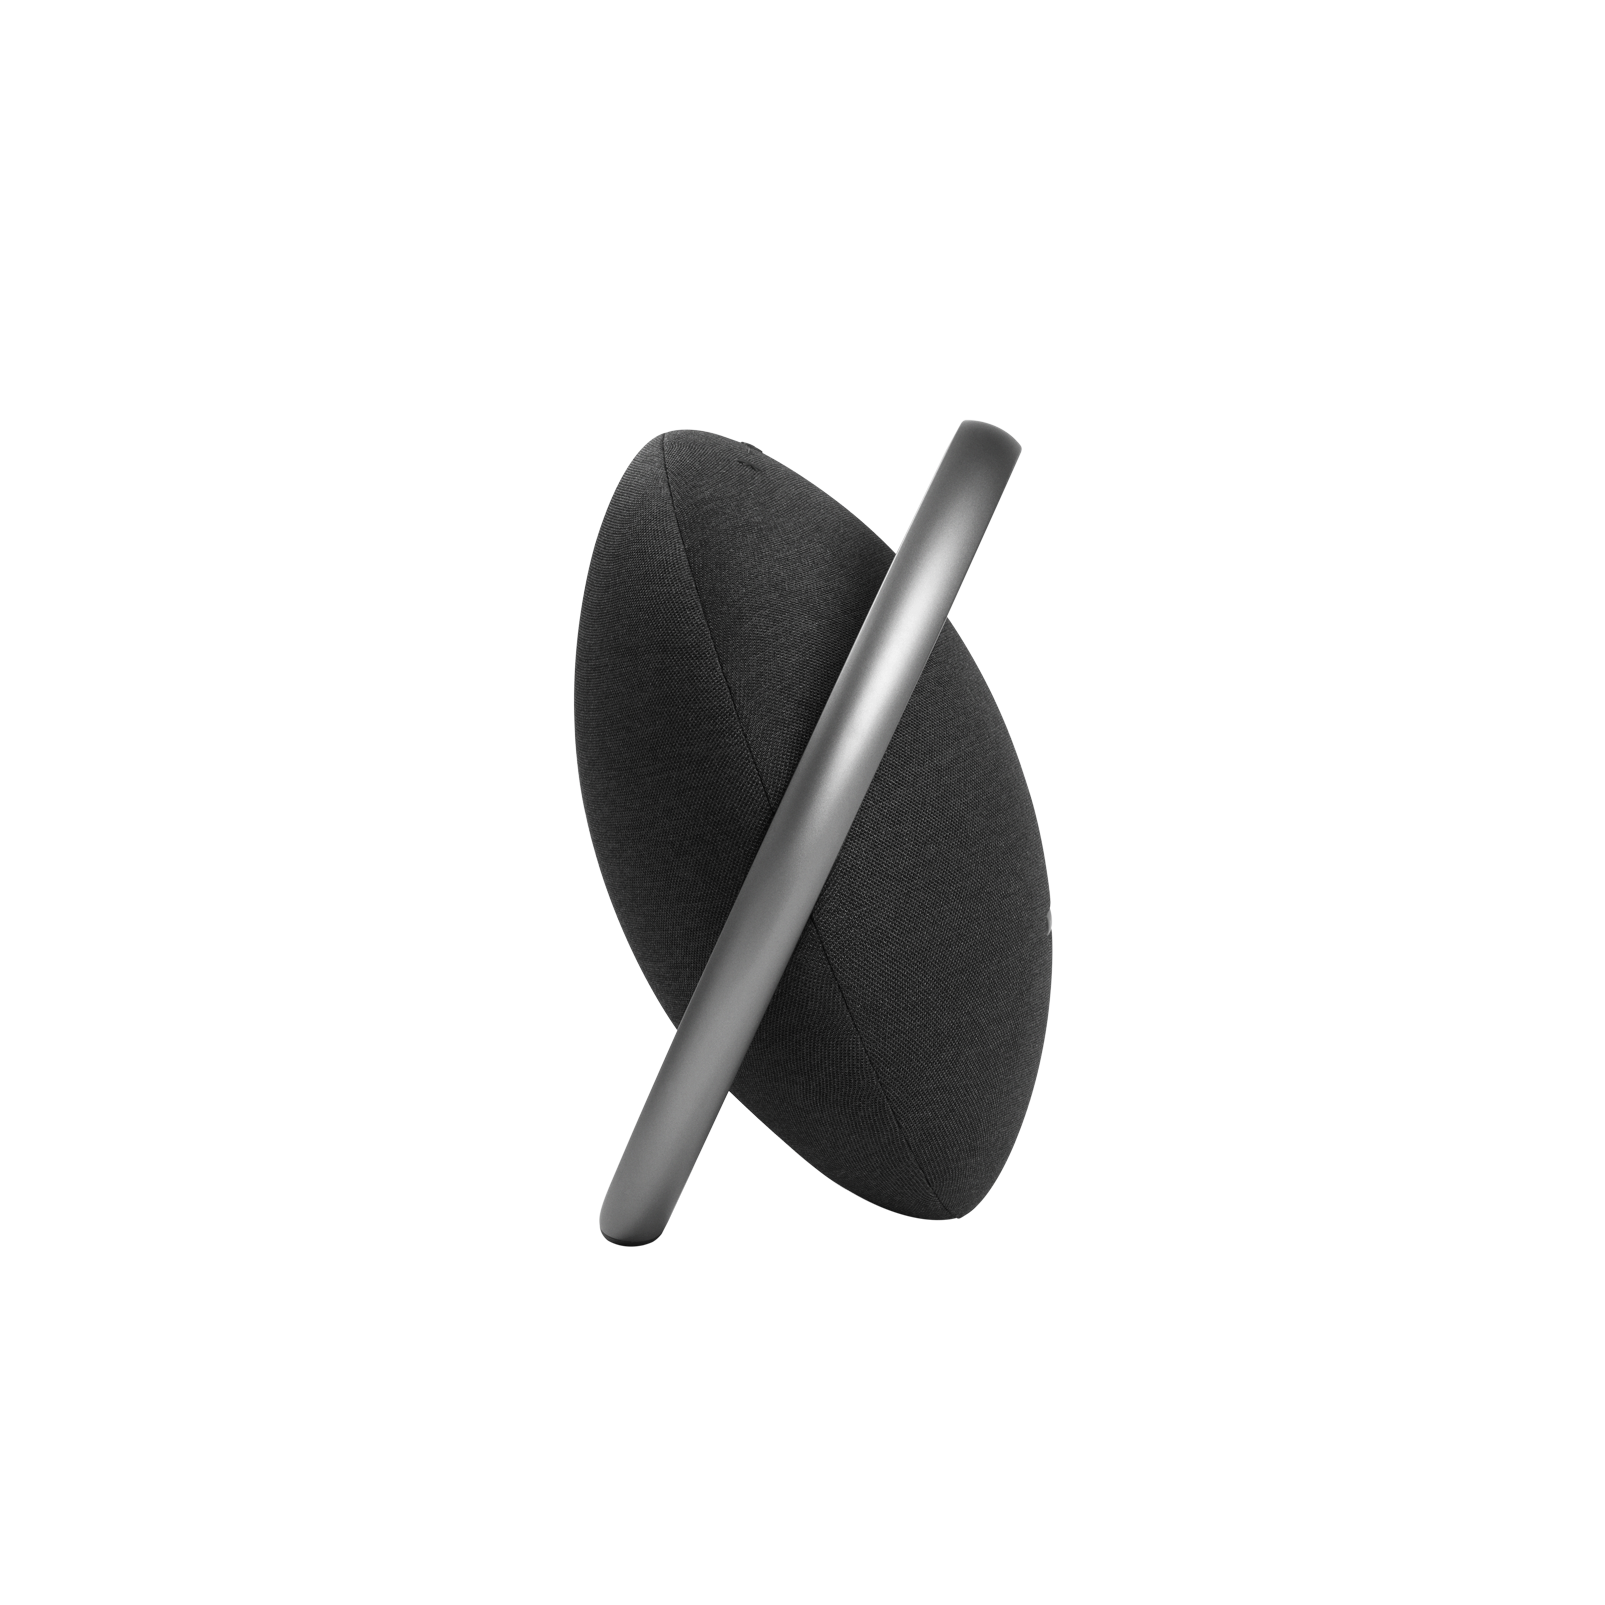 Onyx Studio 7 - Black - Portable Stereo Bluetooth Speaker - Right